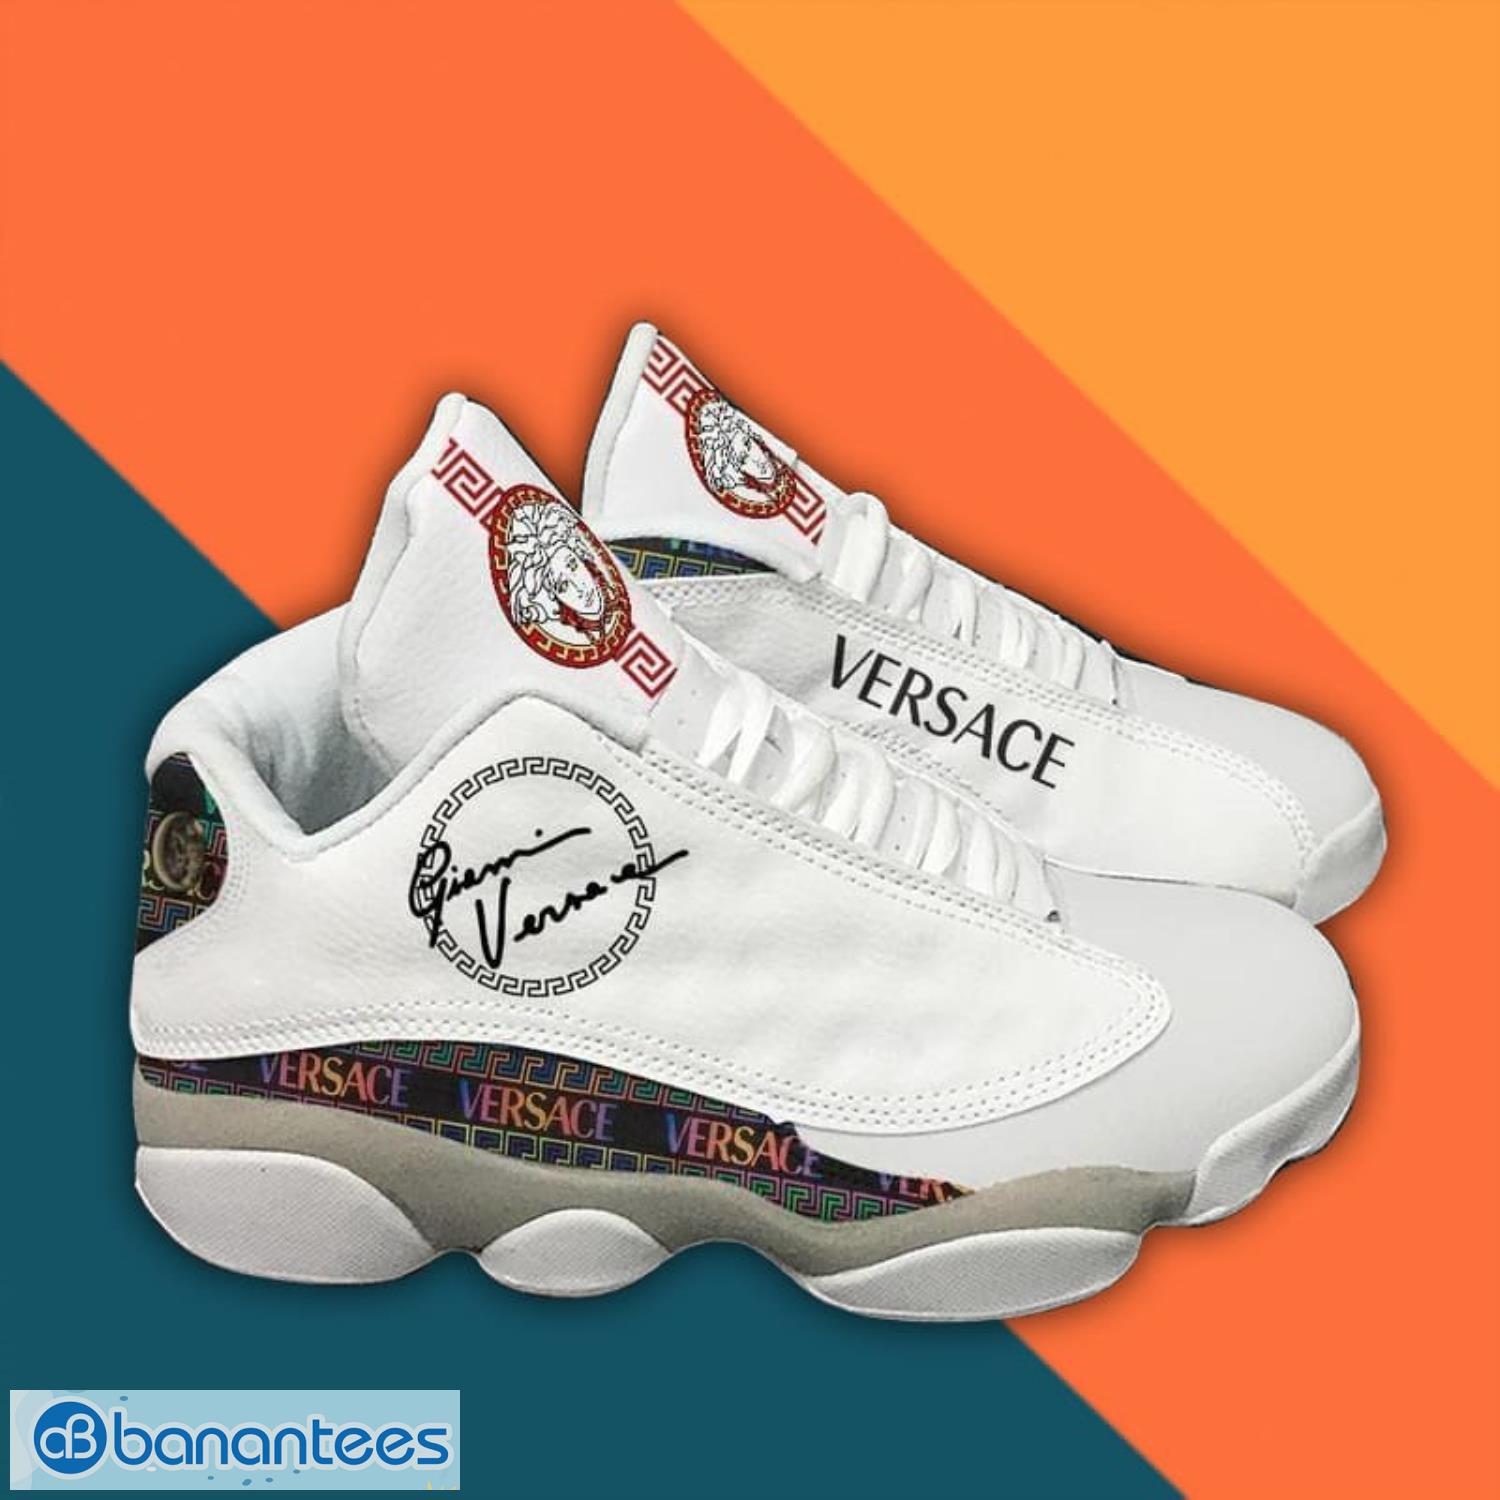 Versace Air Jordan 13 Sneaker Shoes Product Photo 3